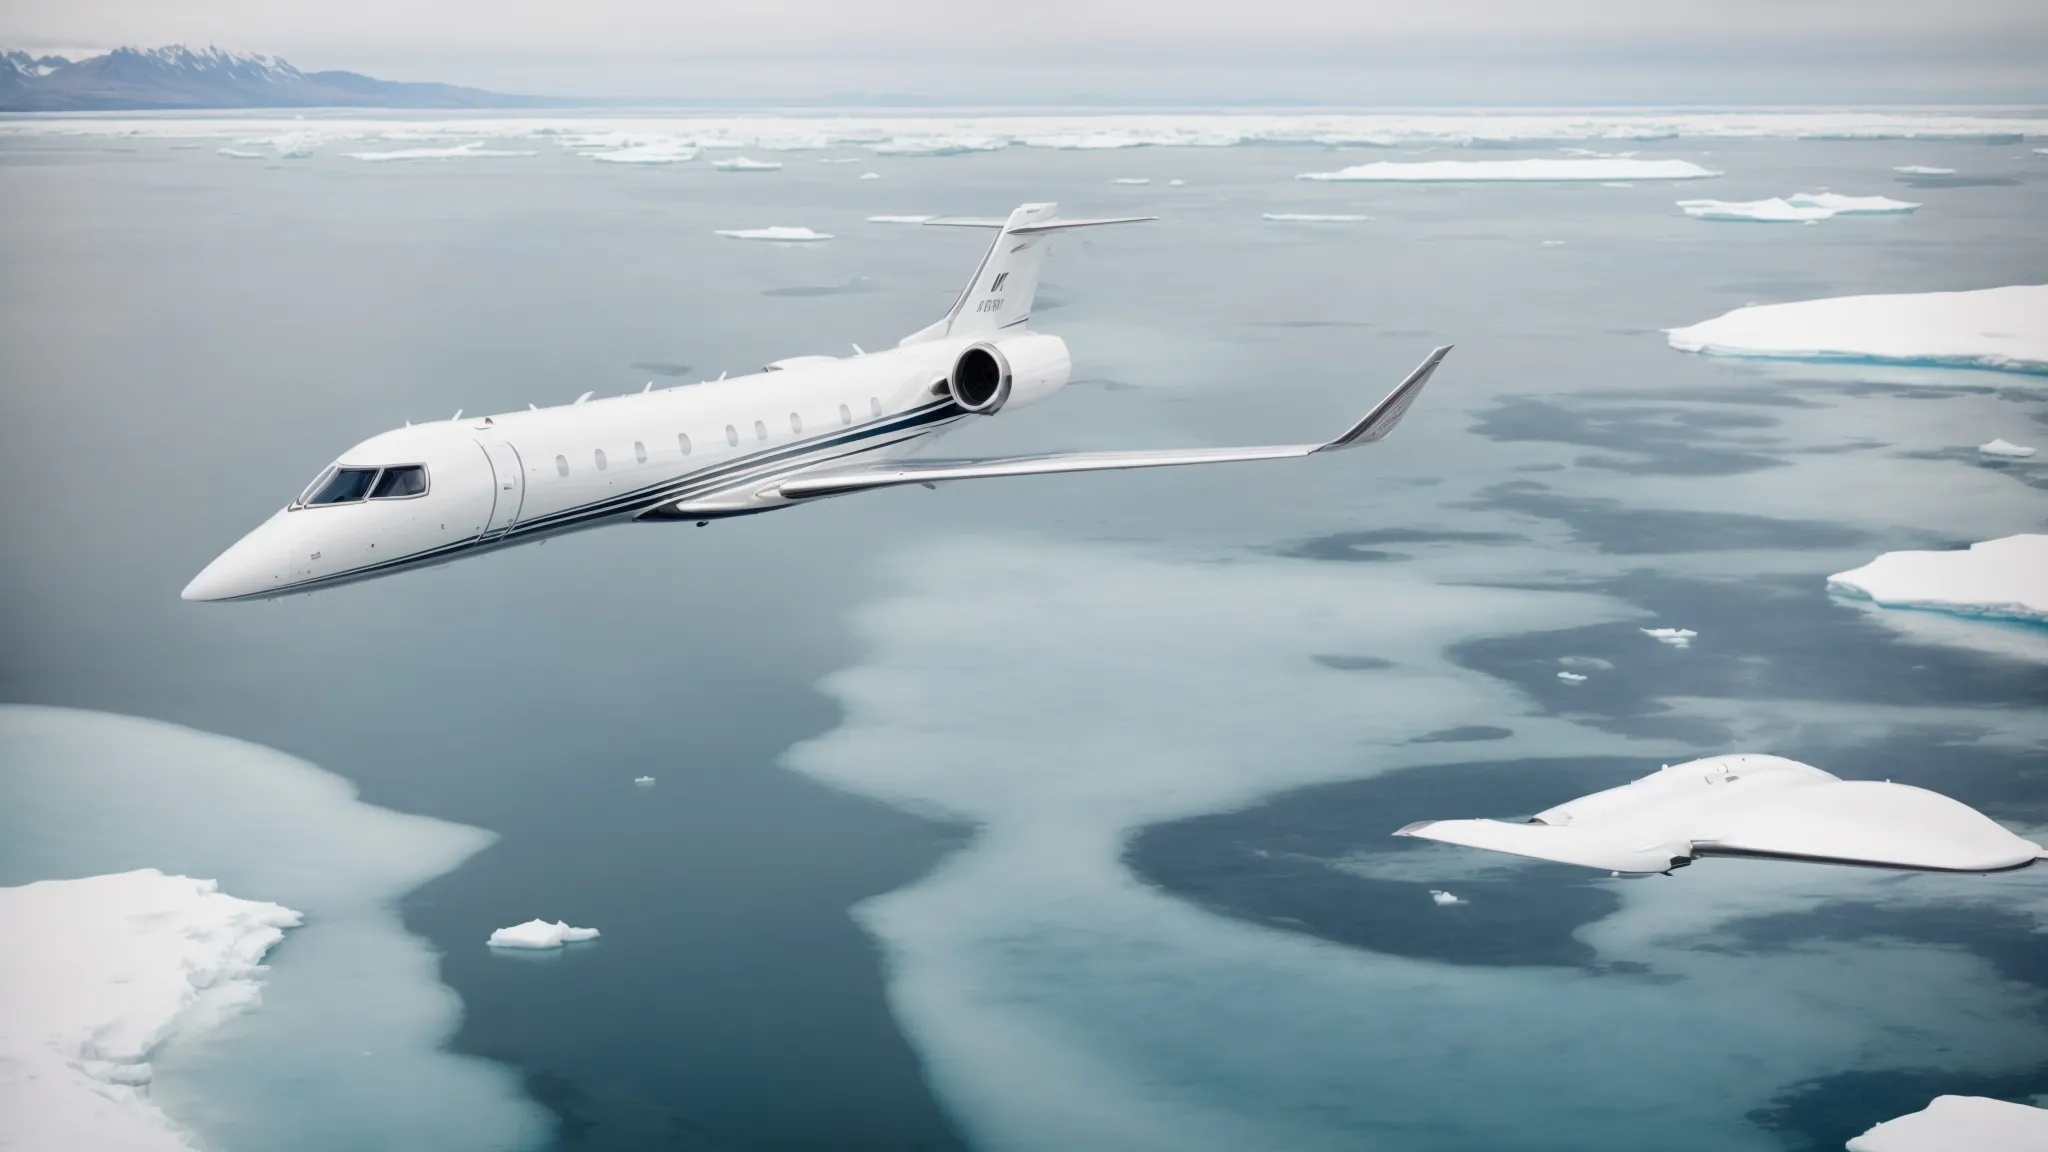 a sleek private jet flies over a majestic icy landscape where polar bears roam near the open sea.